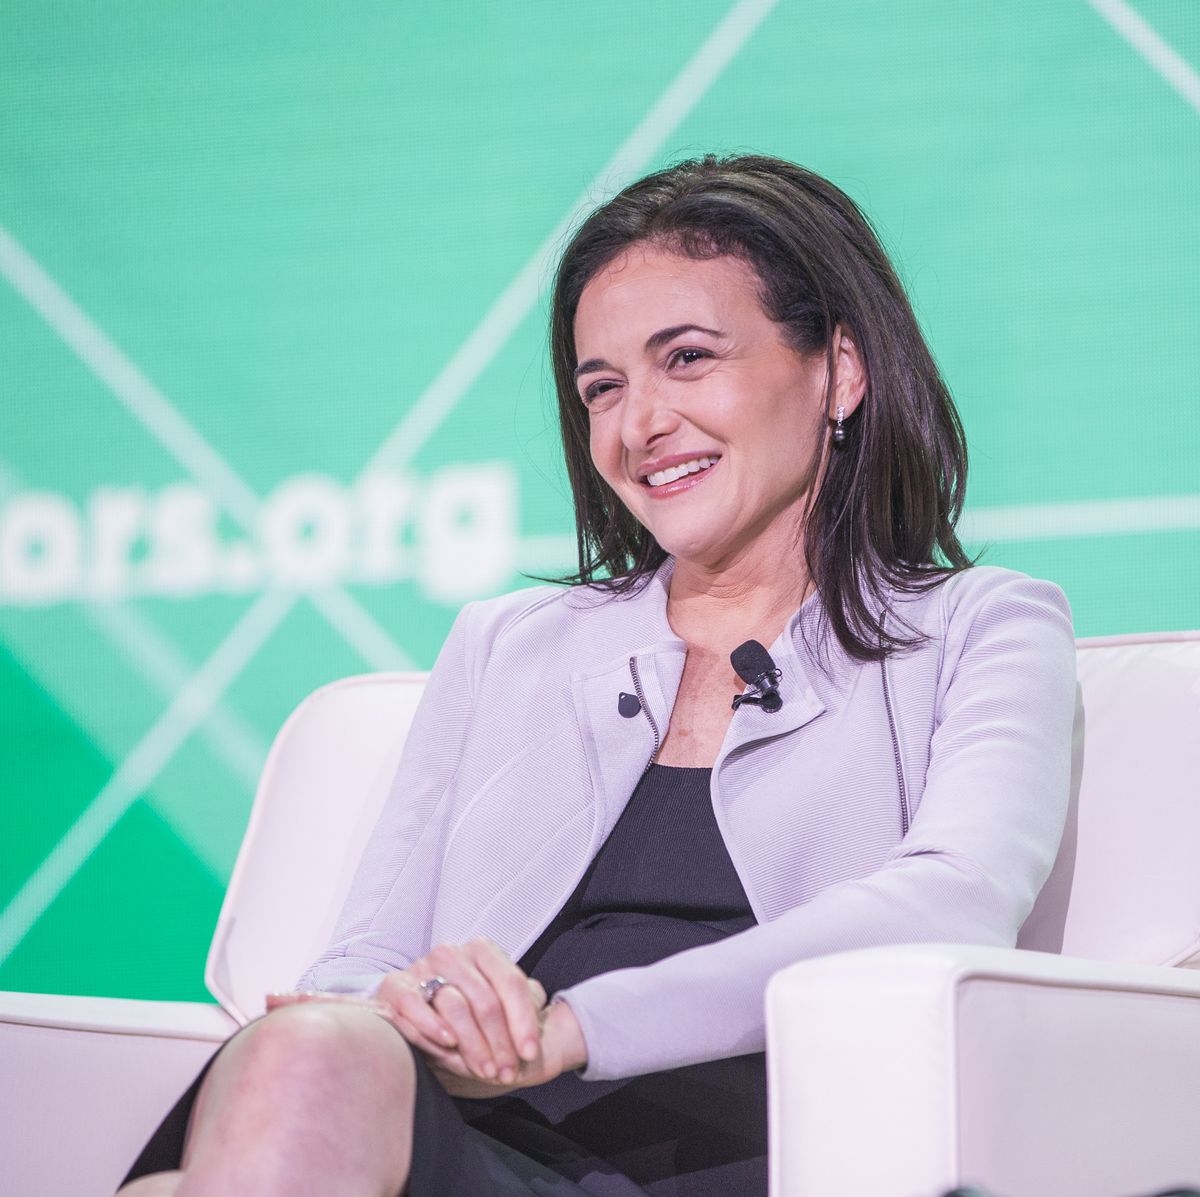 Facebook's Sheryl Sandberg Addresses The U.S. Conference Of Mayors In Boston